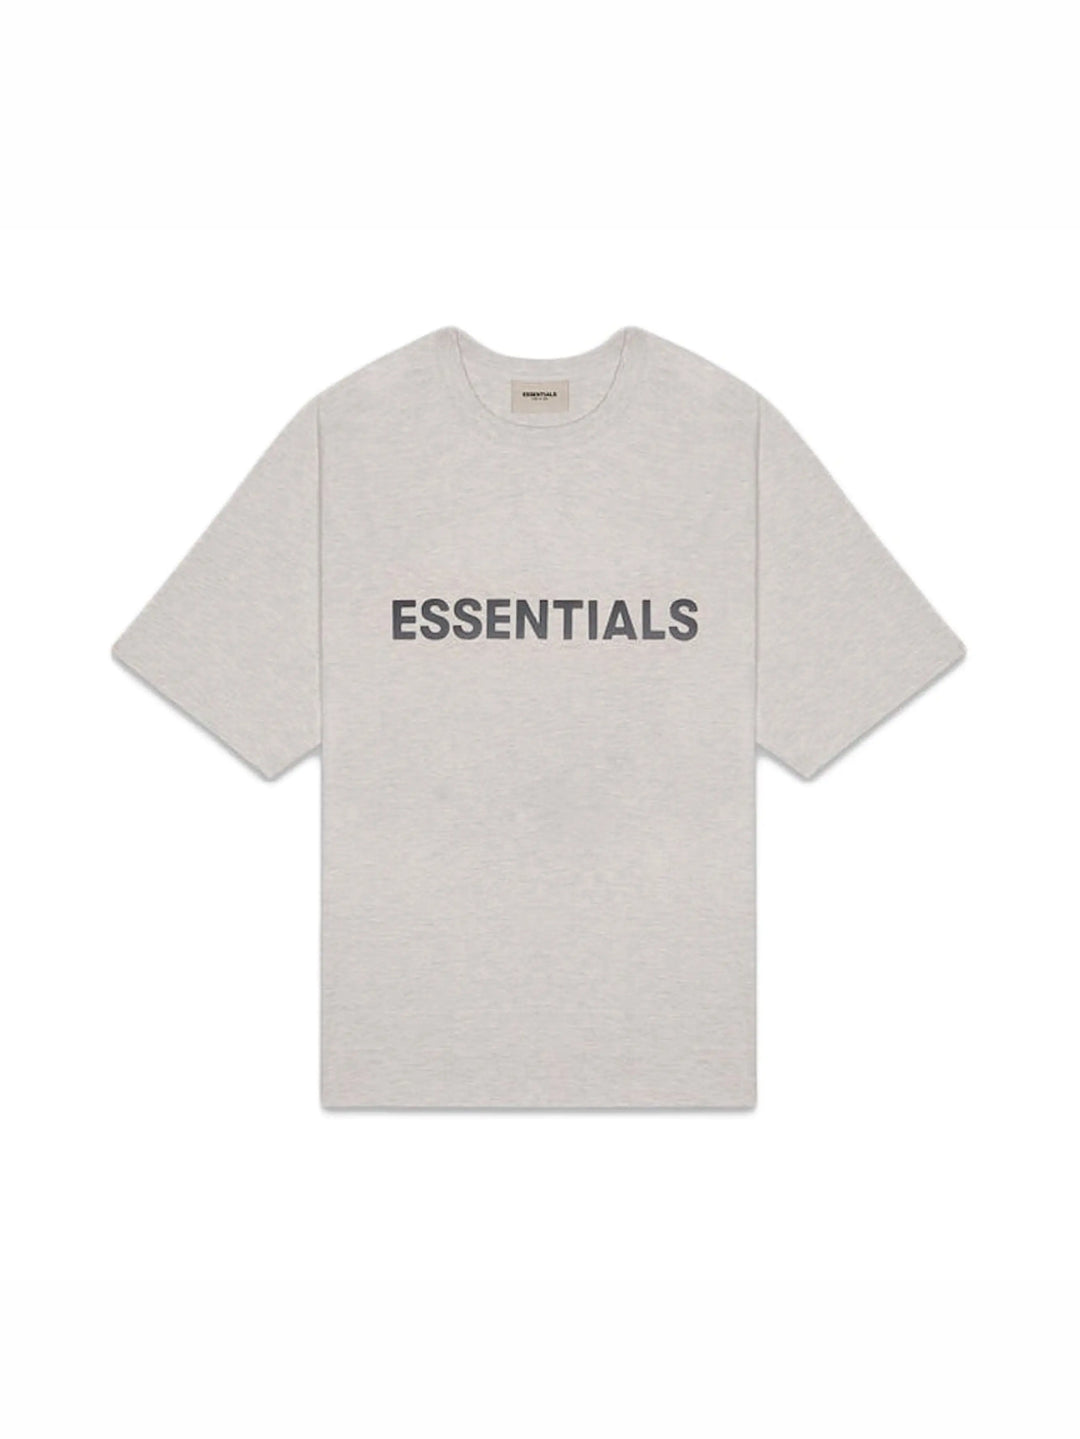 Fear of God Essentials Boxy T-Shirt Applique Logo Heather Oatmeal in Melbourne, Australia - Prior